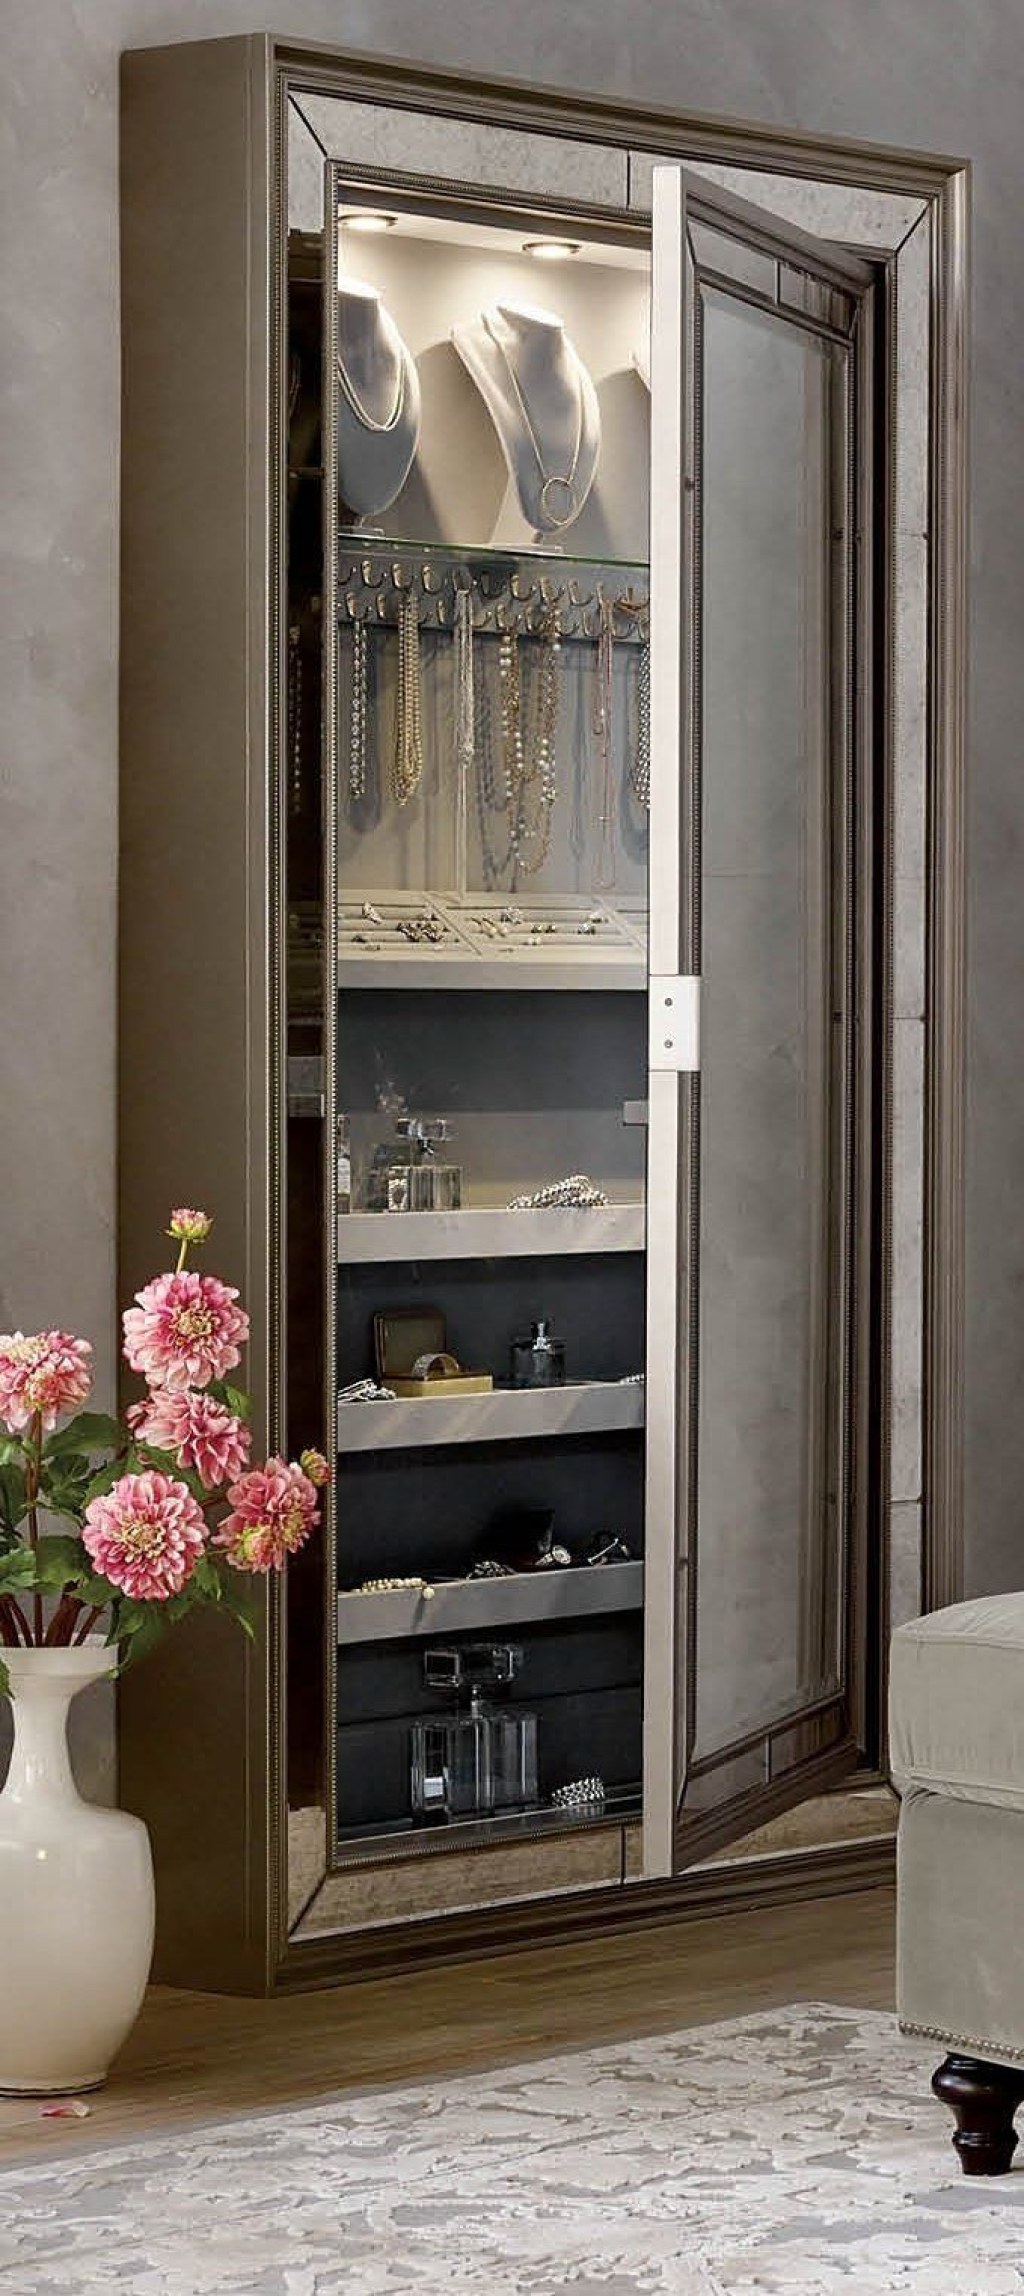 Picture of: Loren Jewelry Storage Mirror  Frontgate  Storage mirror, Storage